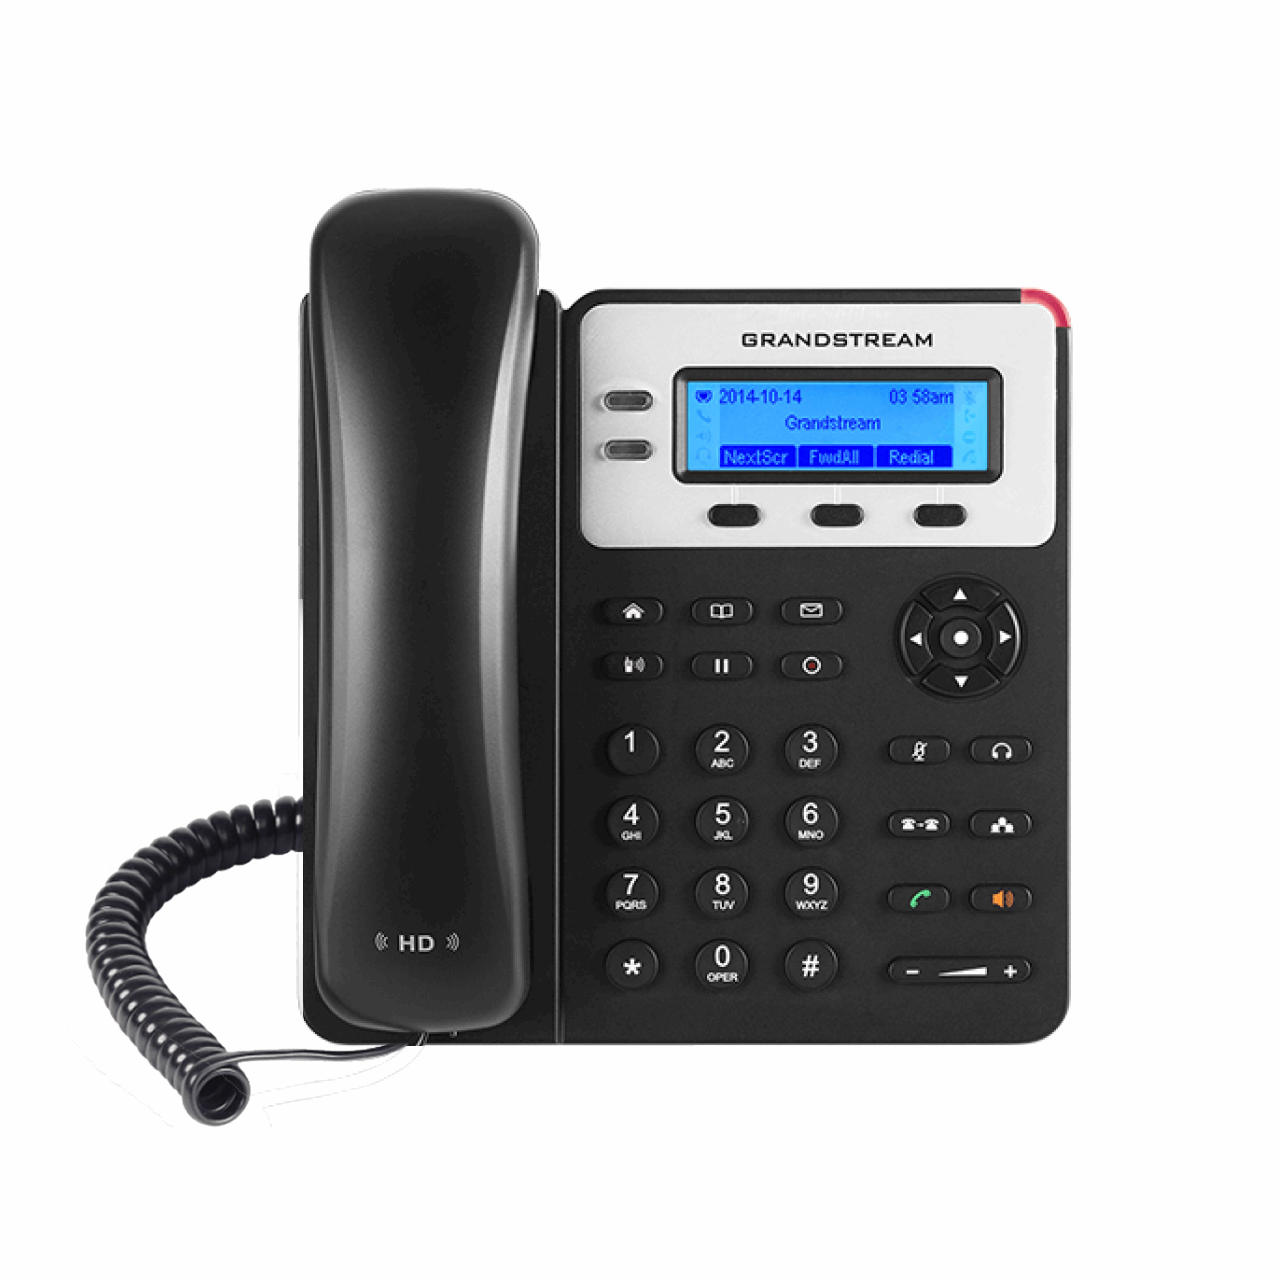  Phone Grandstream GXP 1625 ا تلفن تحت شبکه گرنداستریم GXP 1625 کد 265202